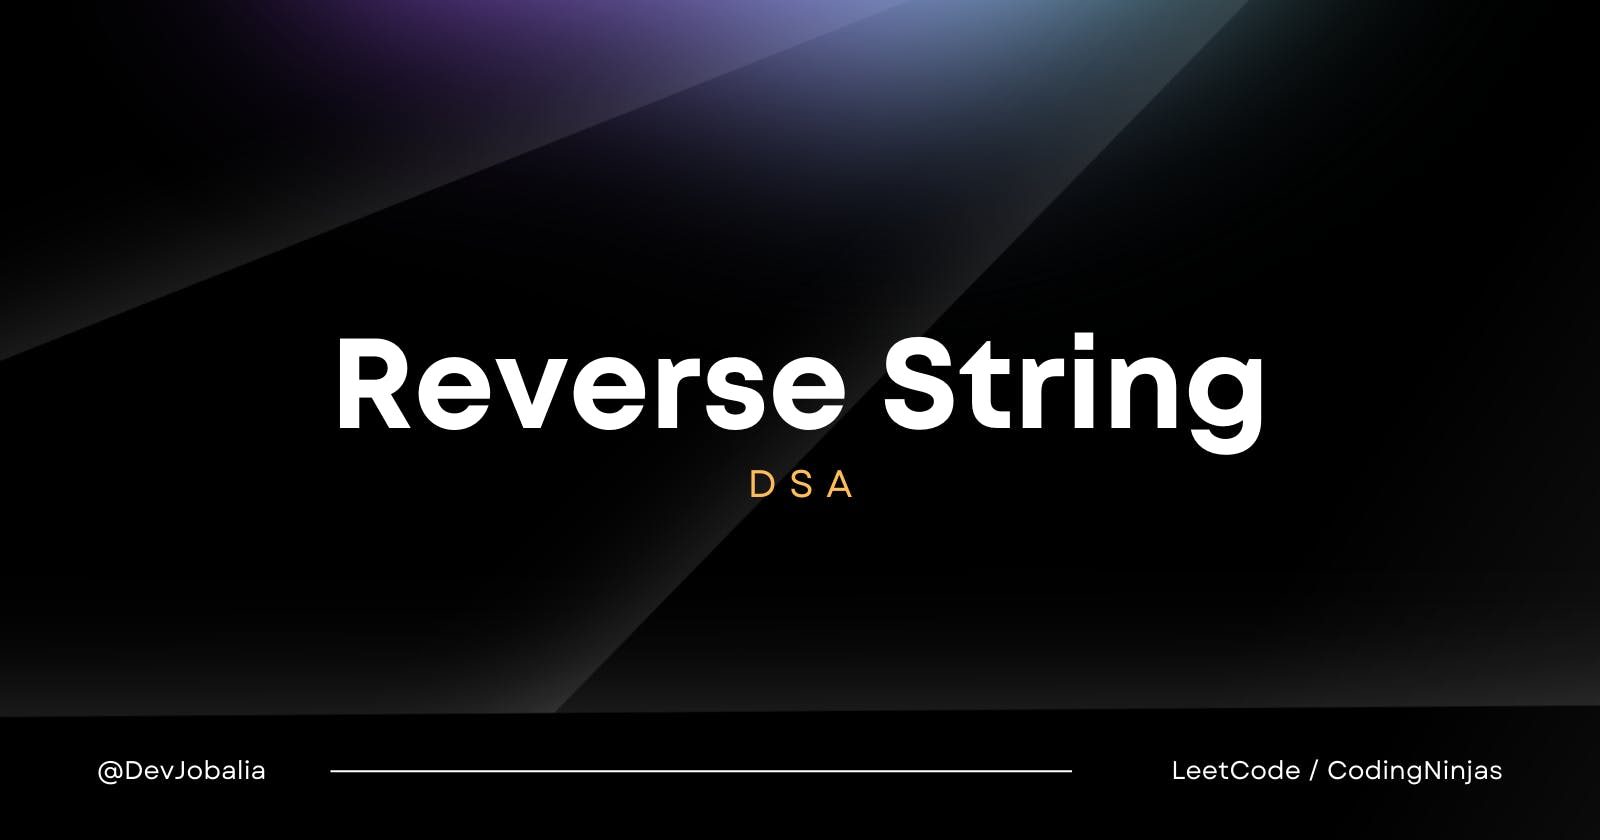 Problem: Reverse String